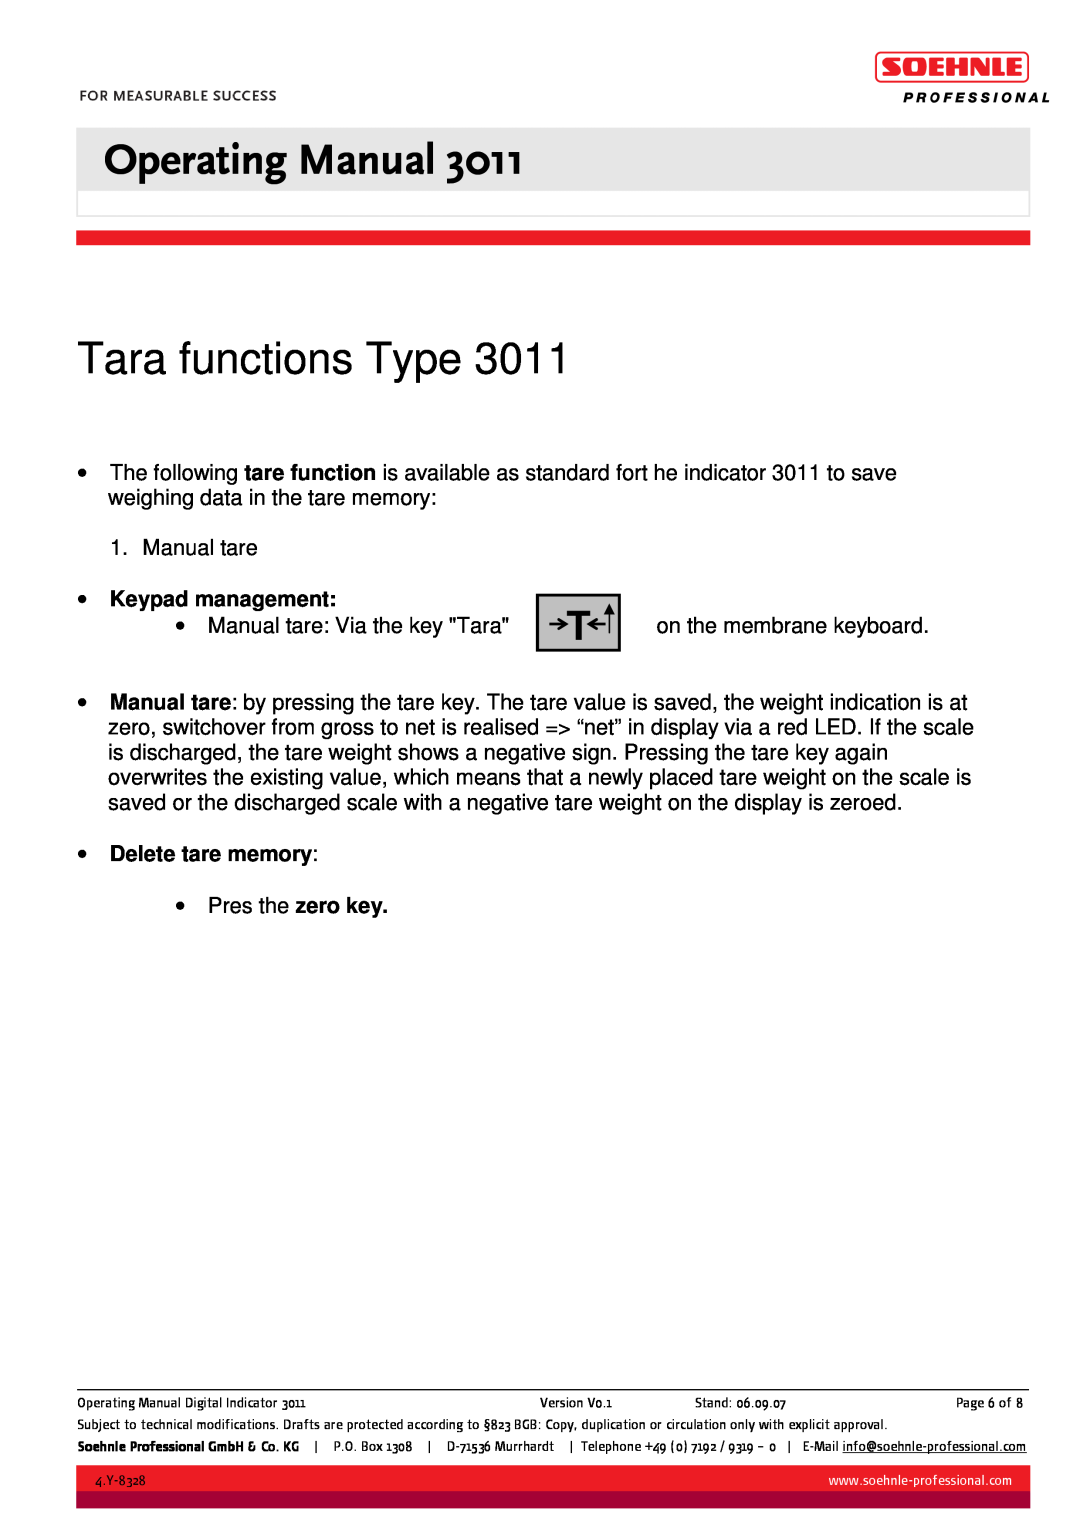 Soehnle 3011 manual Tara functions Type, Keypad management, Delete tare memory, Operating Manual 